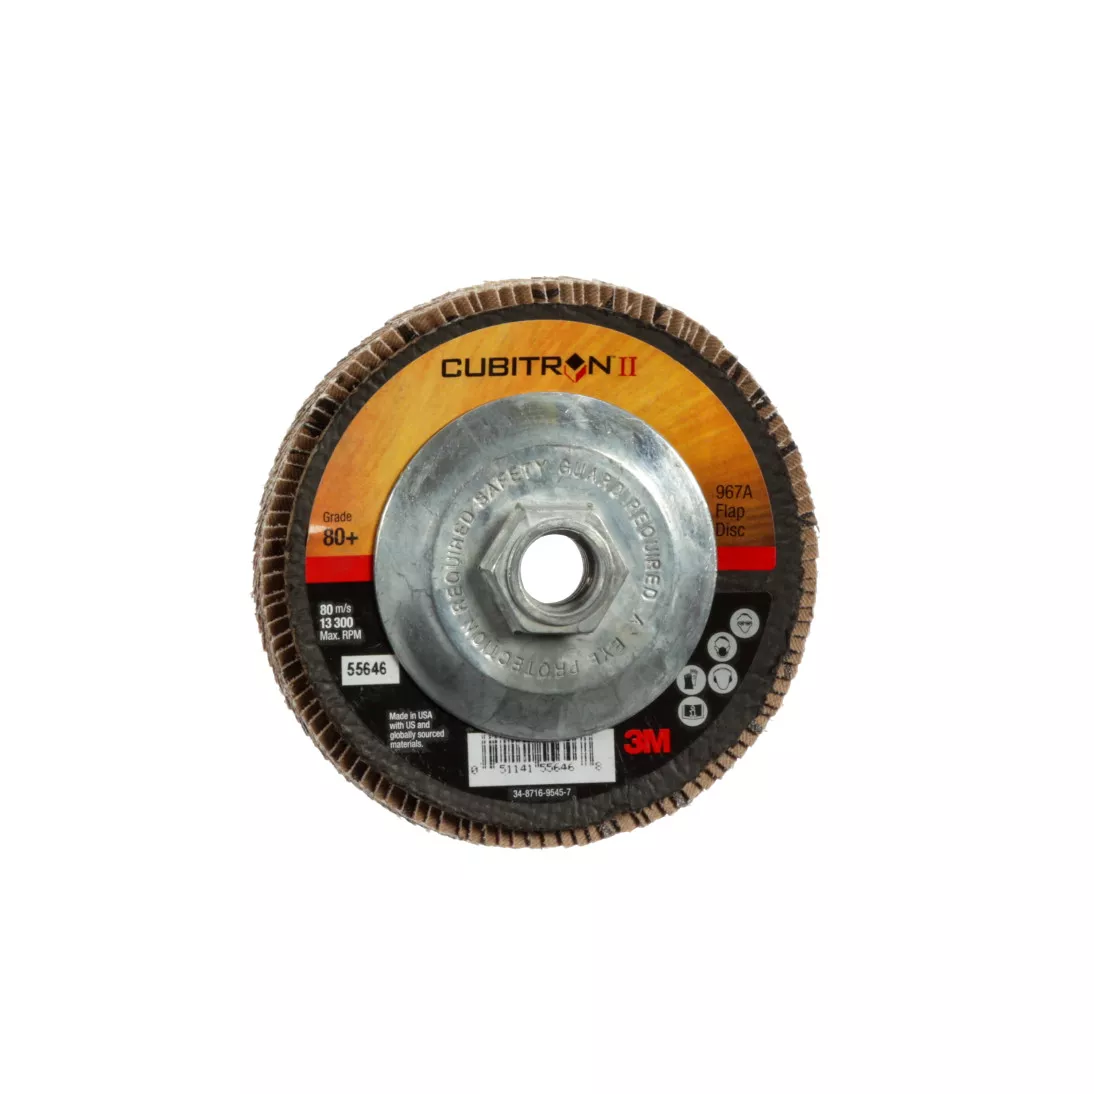 3M™ Cubitron™ II Flap Disc 967A, 80+, T29 Quick Change, 4-1/2 in x
5/8